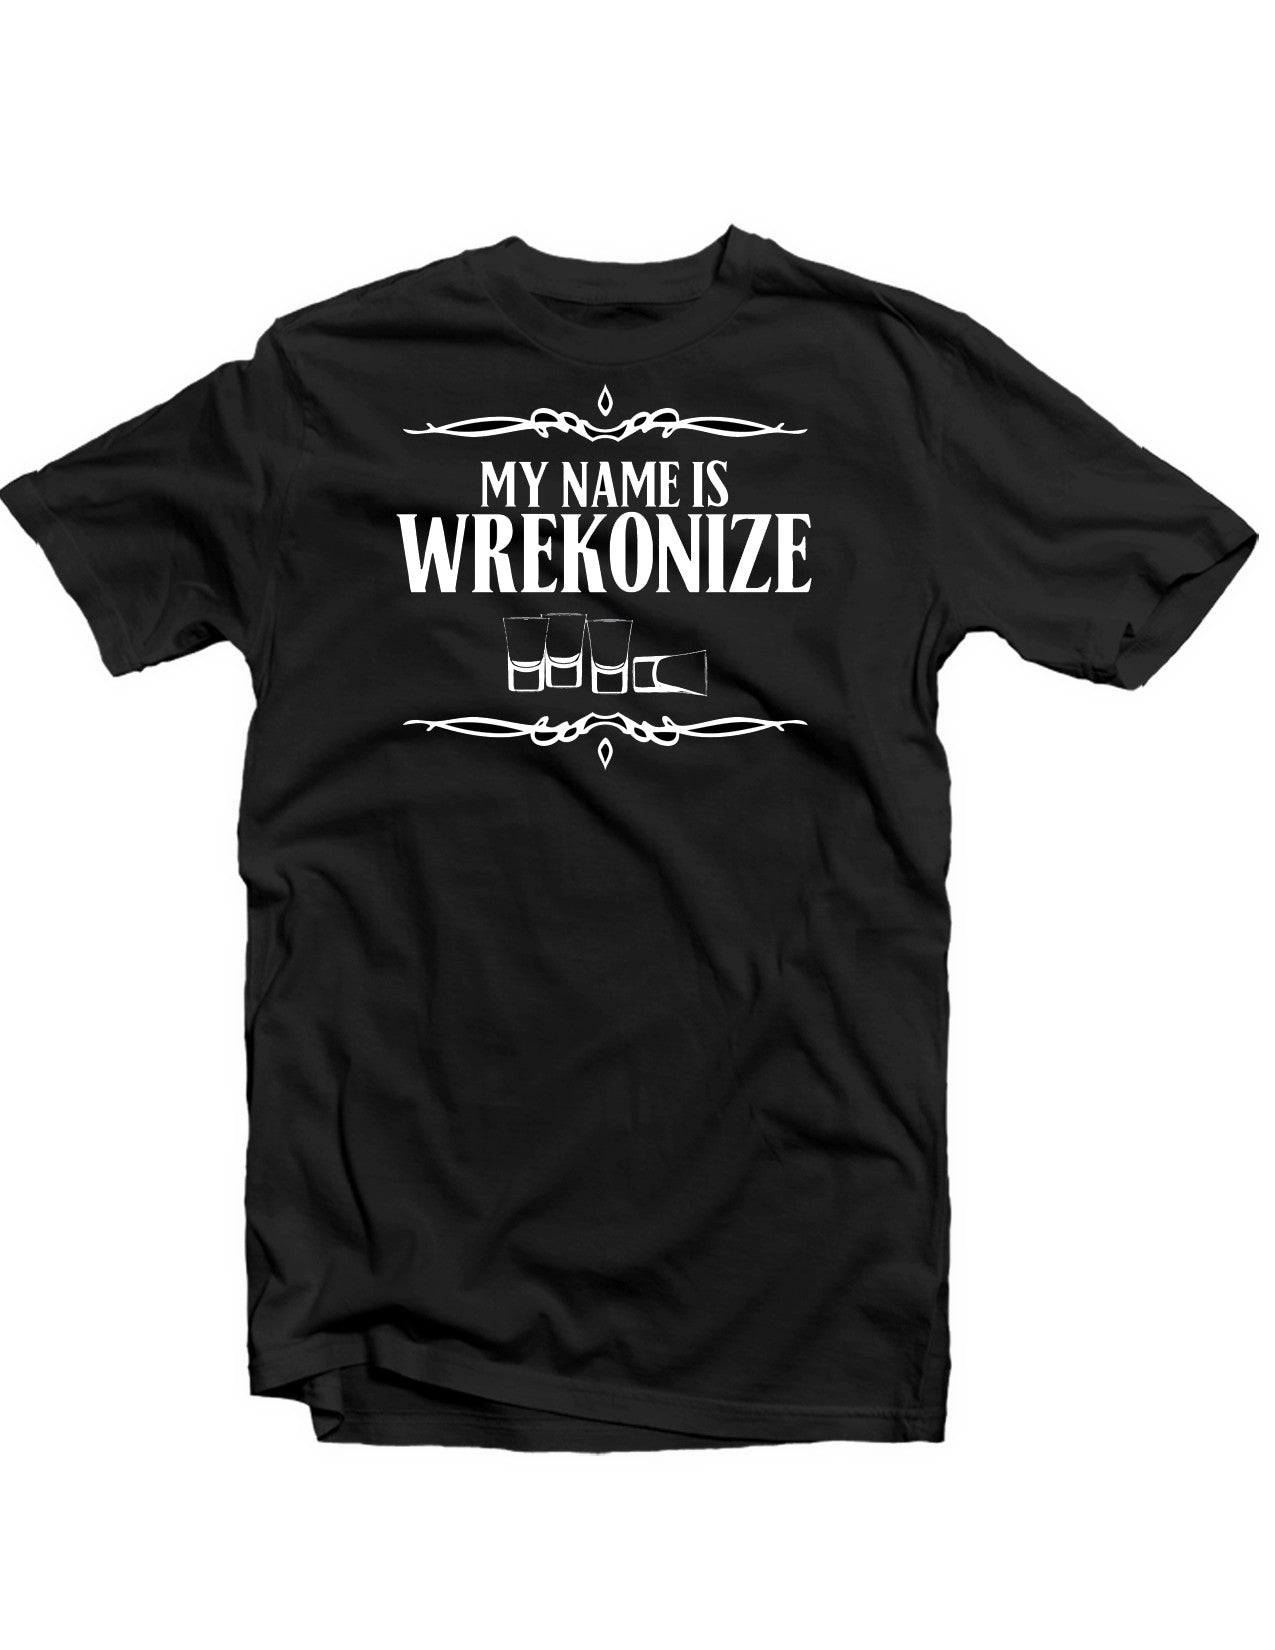 My Name is Wrekonize Tee